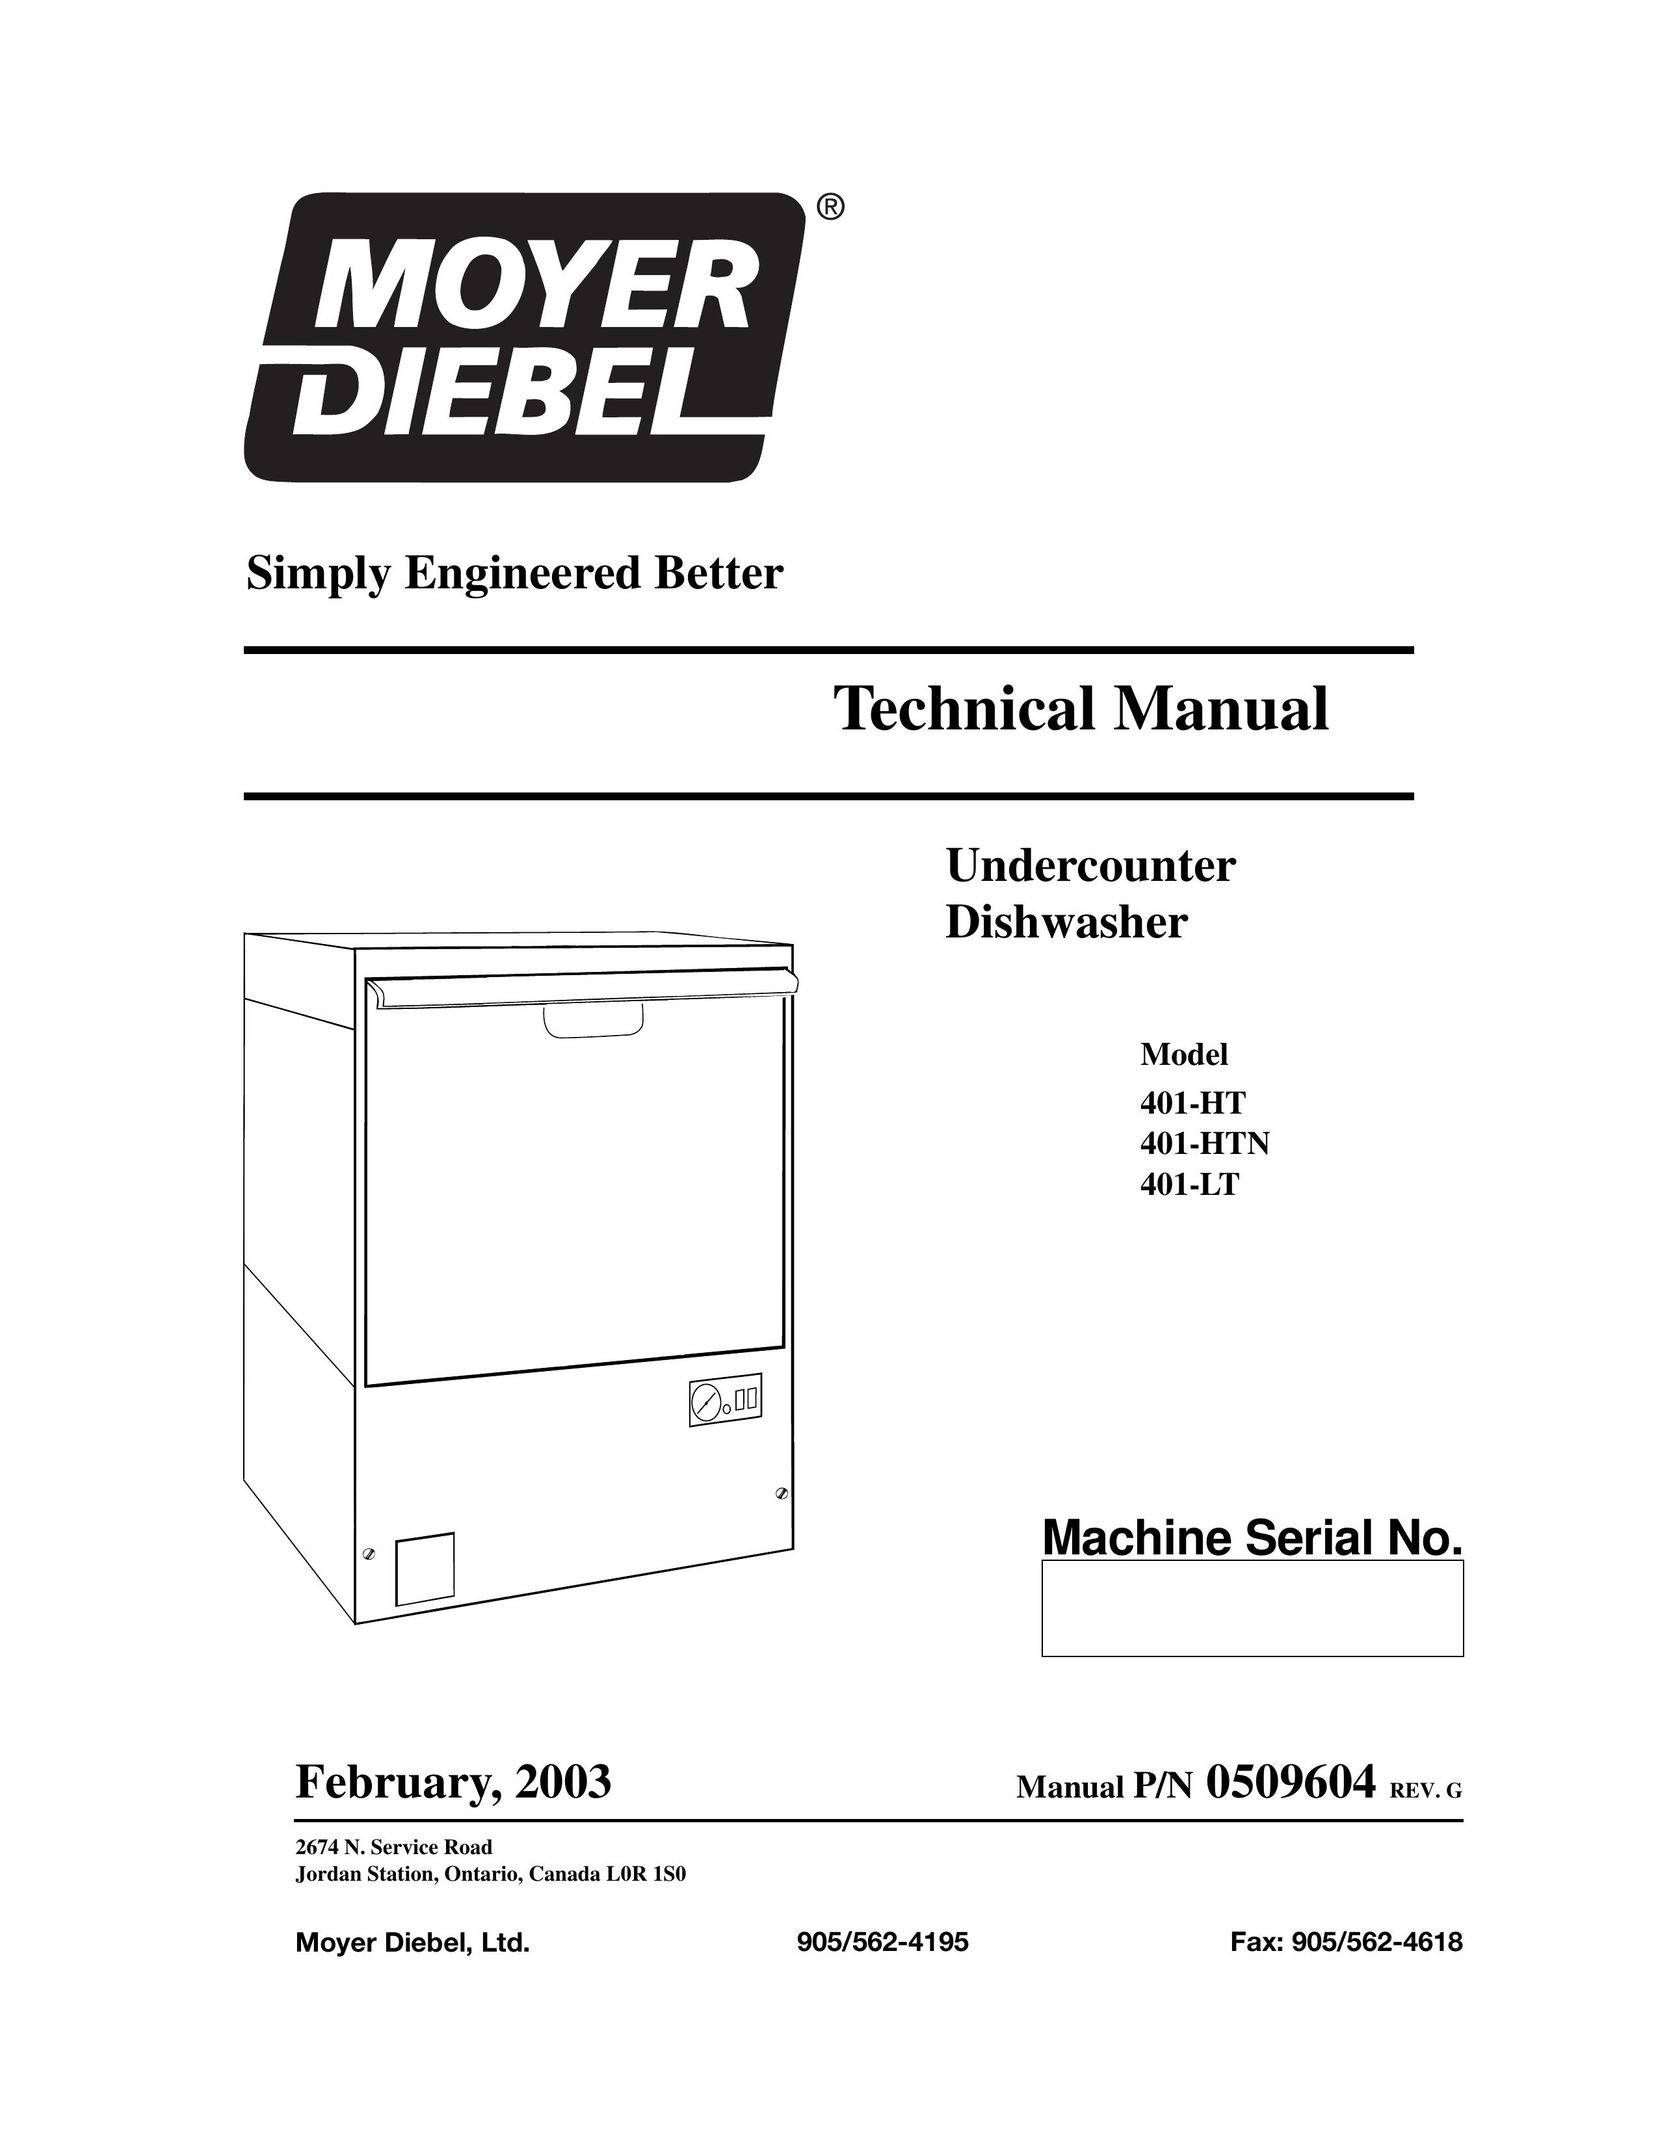 Moyer Diebel 401-LT Dishwasher User Manual